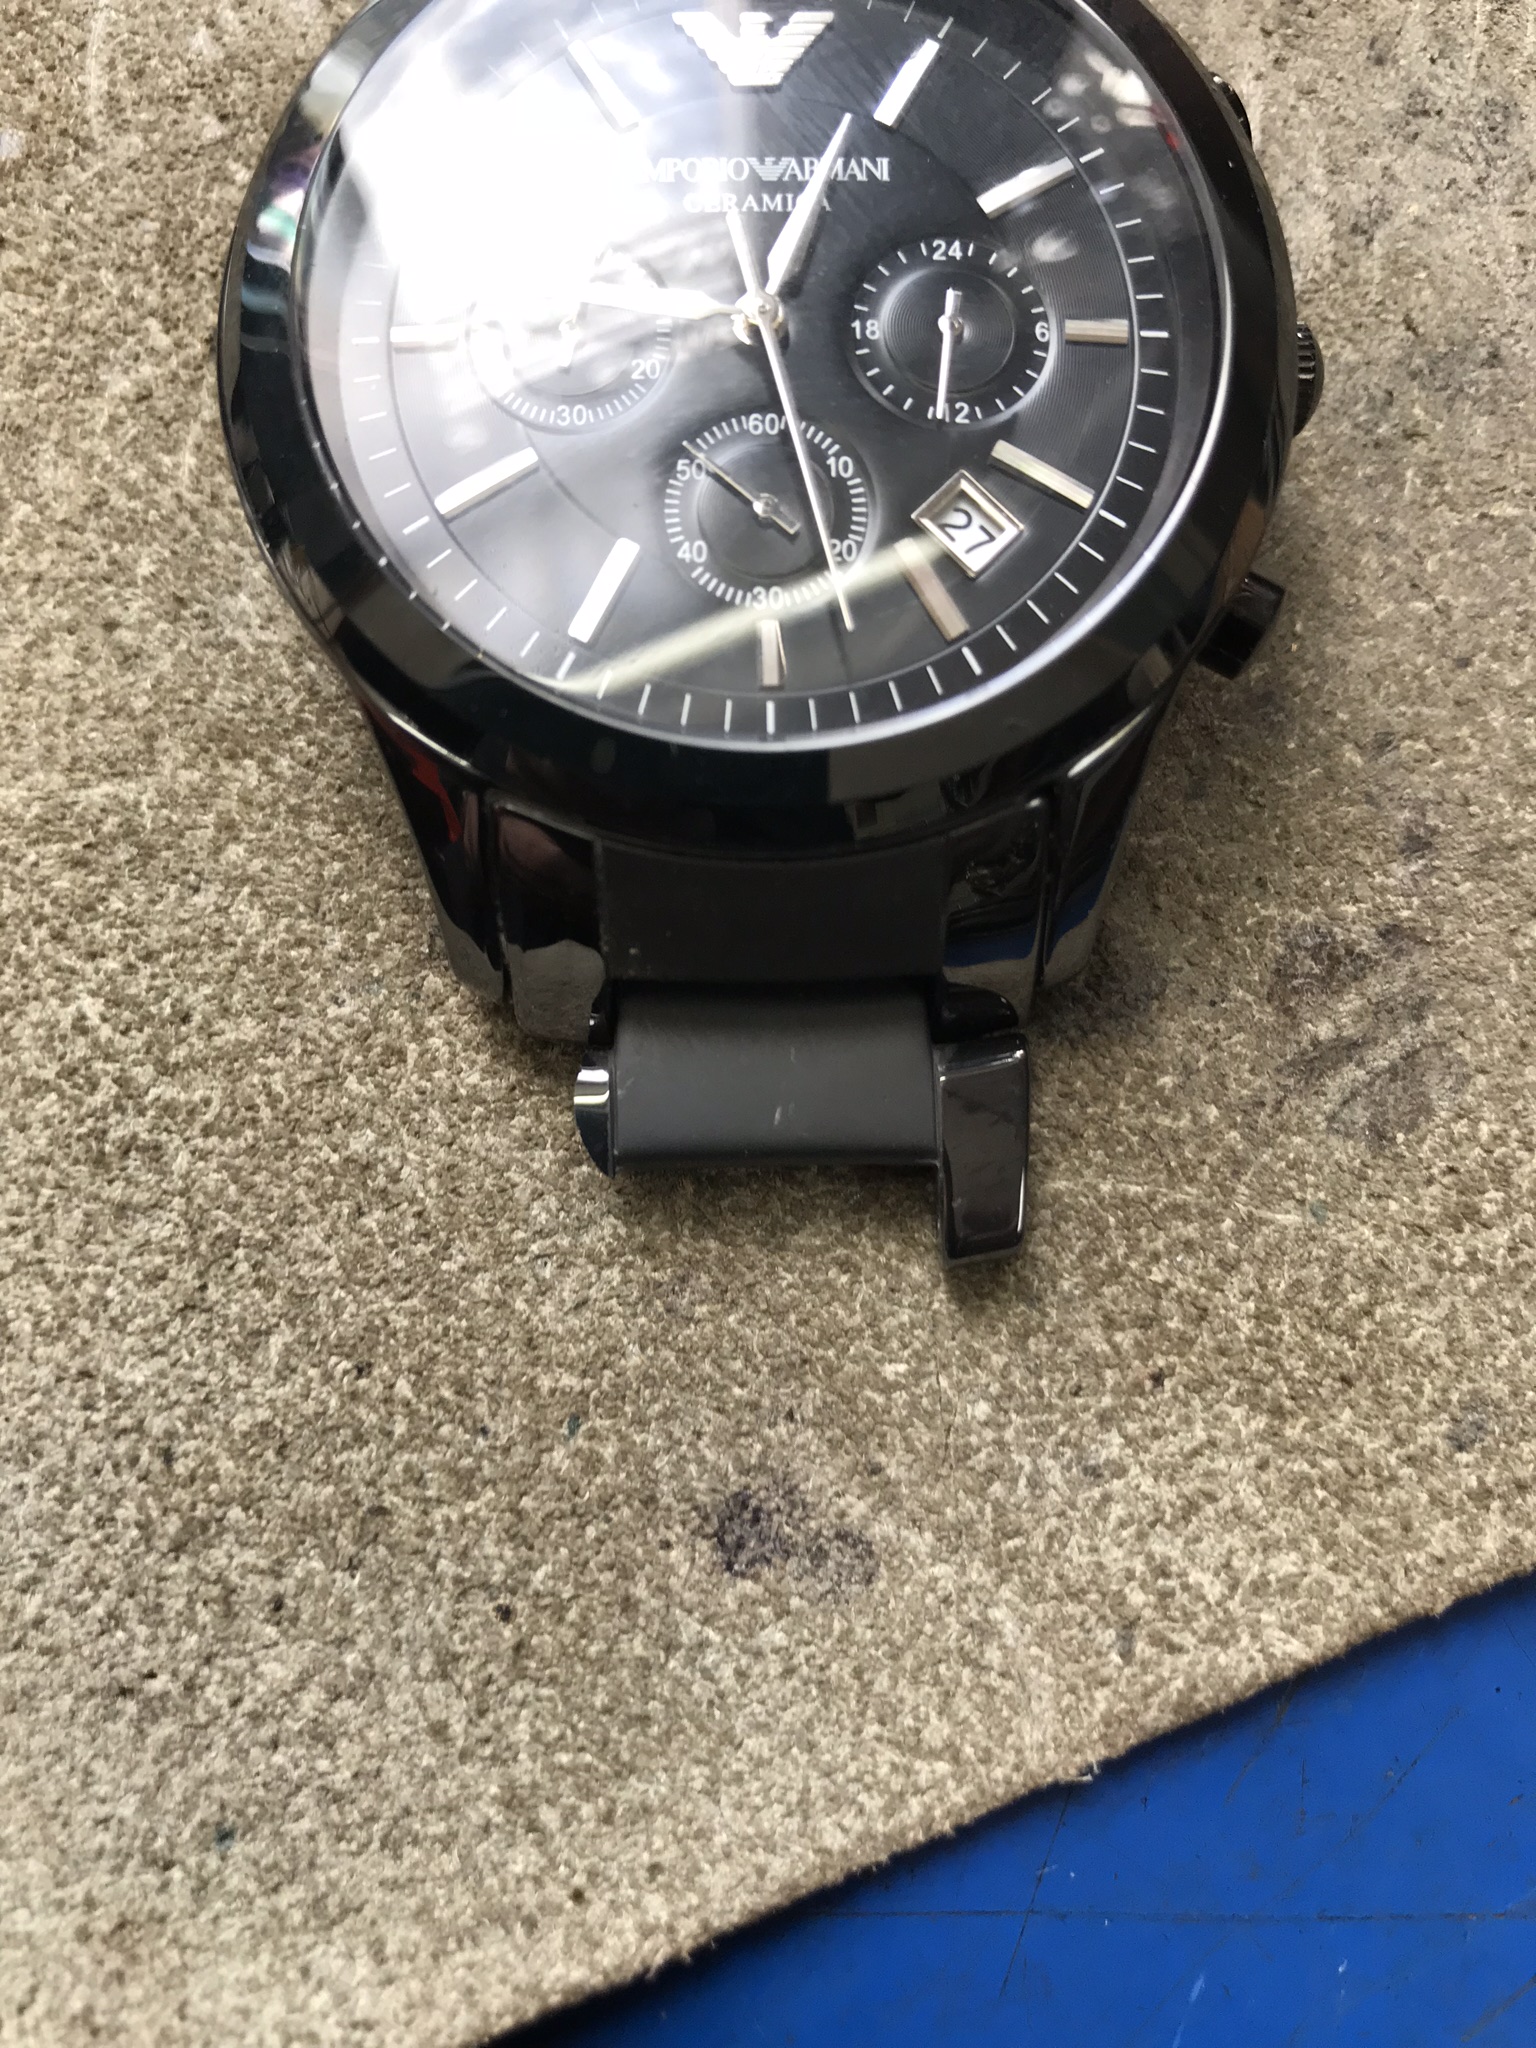 armani ceramic watch strap replacement